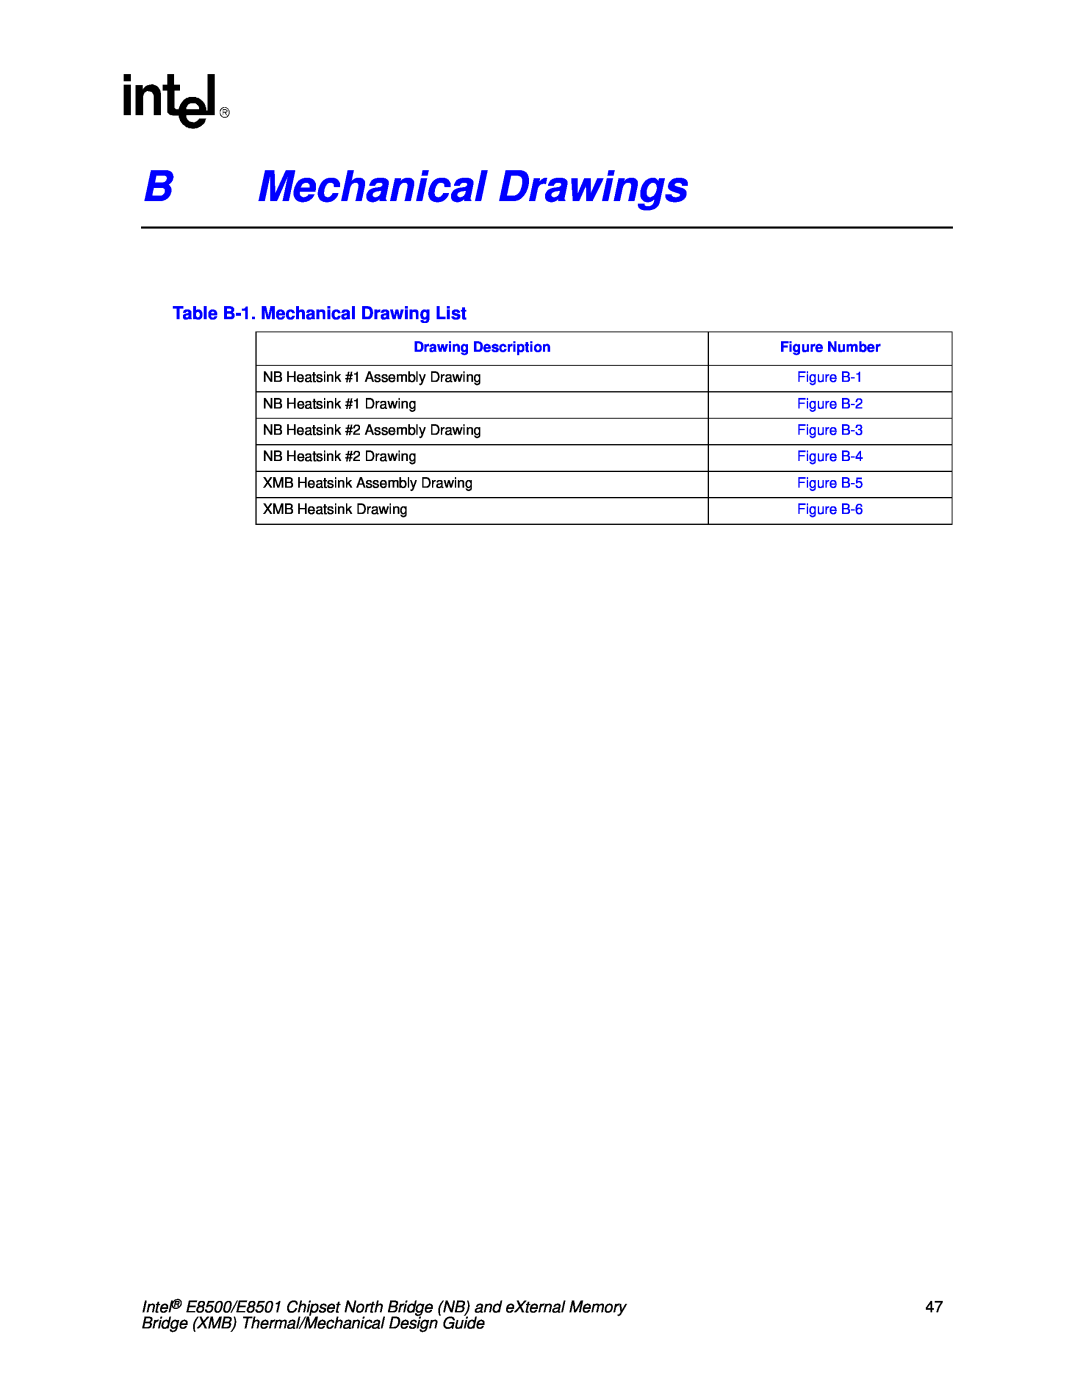 Intel E8501 manual B Mechanical Drawings, Table B-1.Mechanical Drawing List, Bridge XMB Thermal/Mechanical Design Guide 